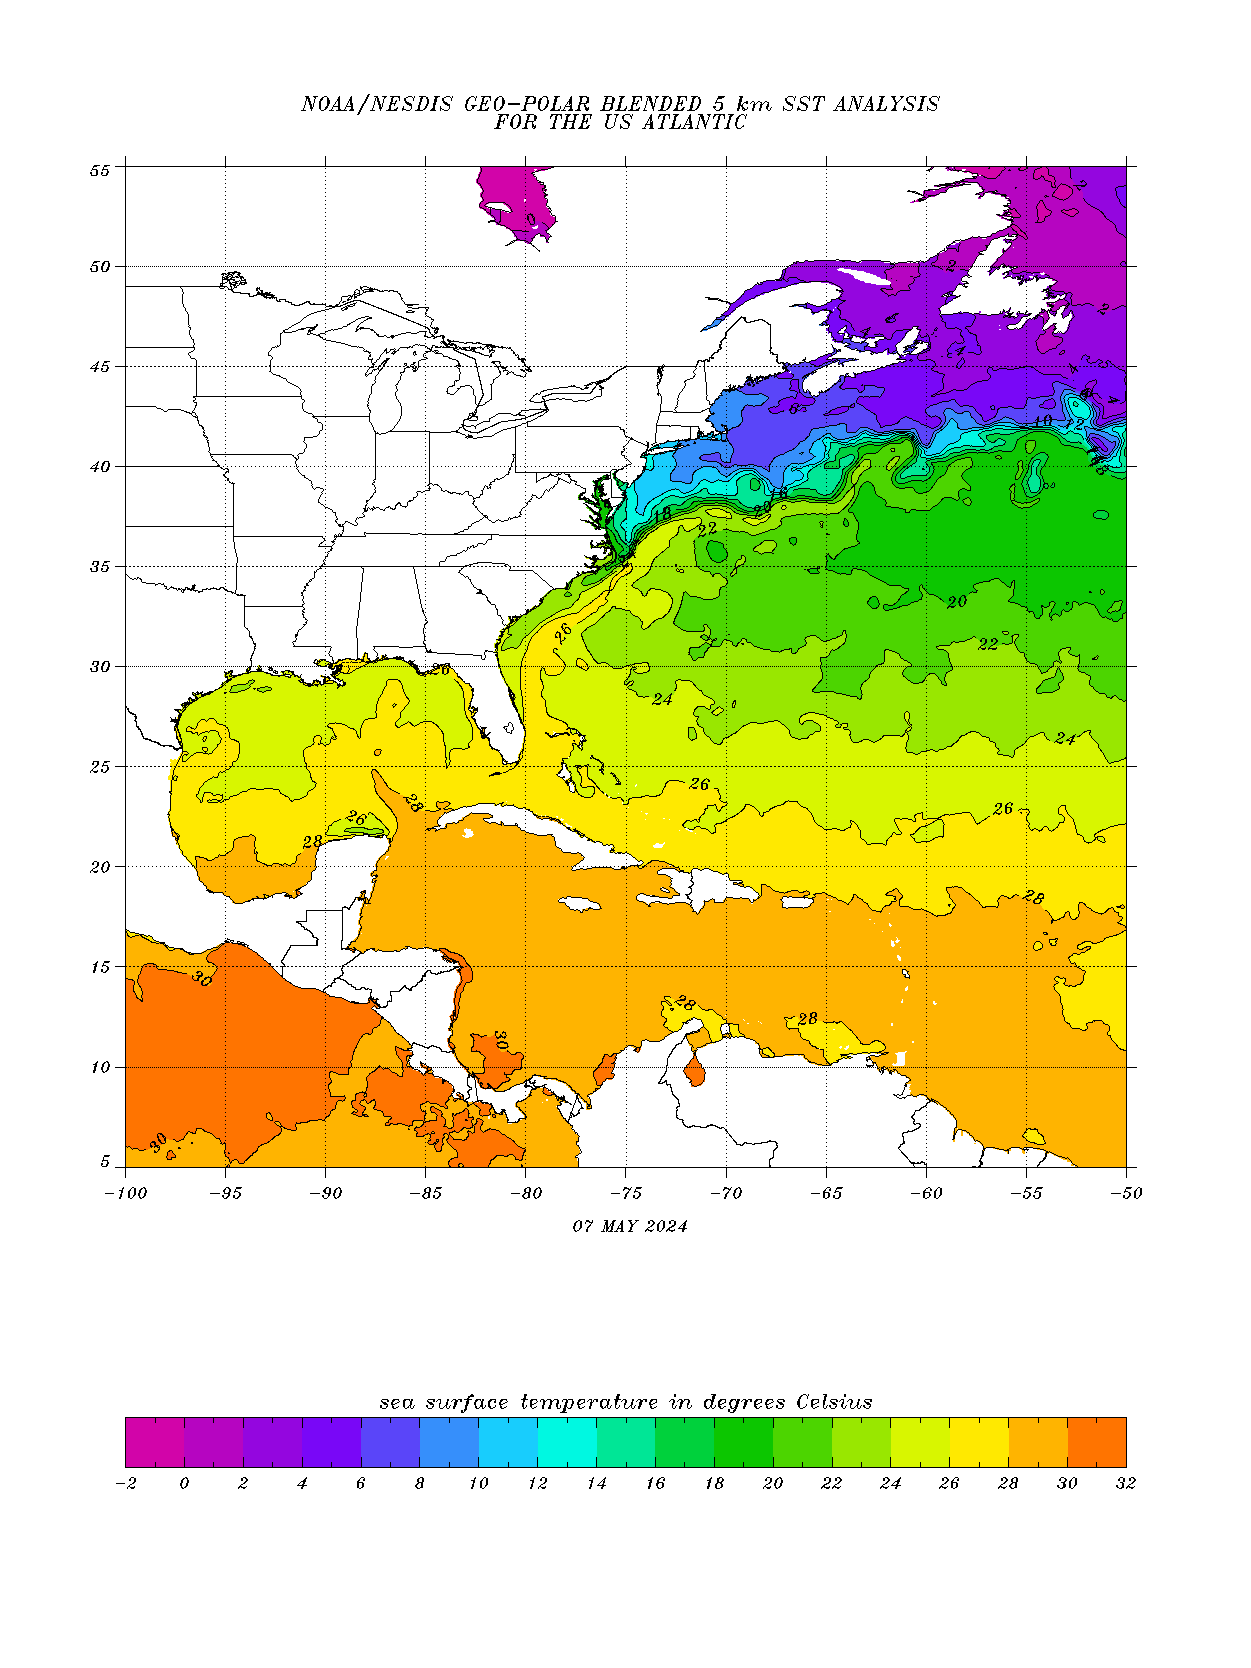 Caribbean water temperature map